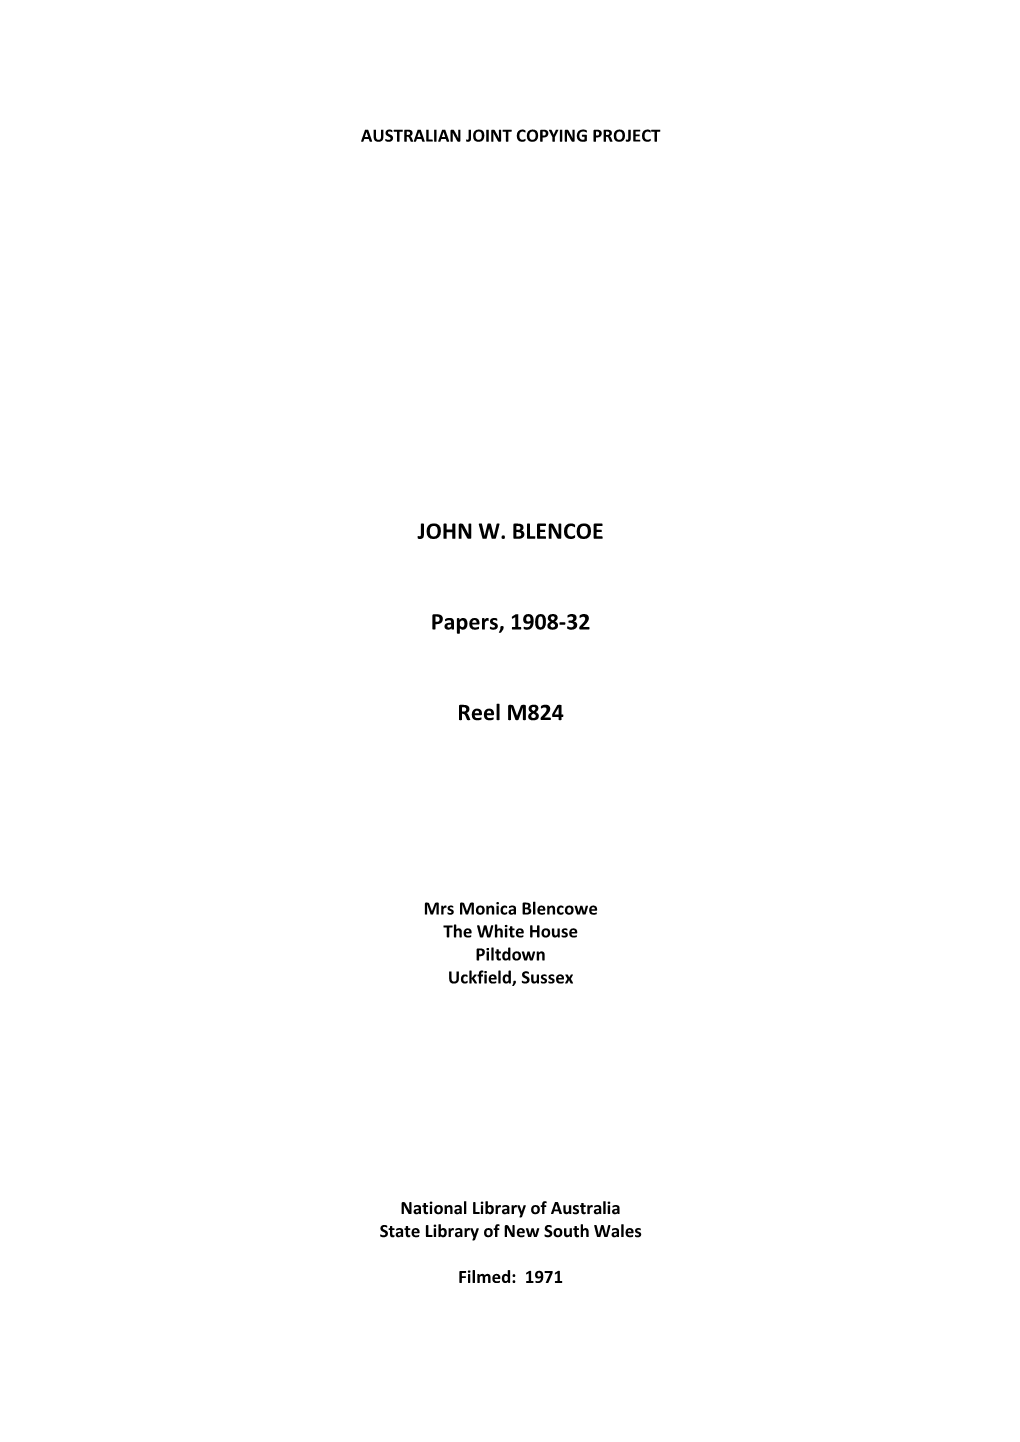 JOHN W. BLENCOE Papers, 1908-32 Reel M824